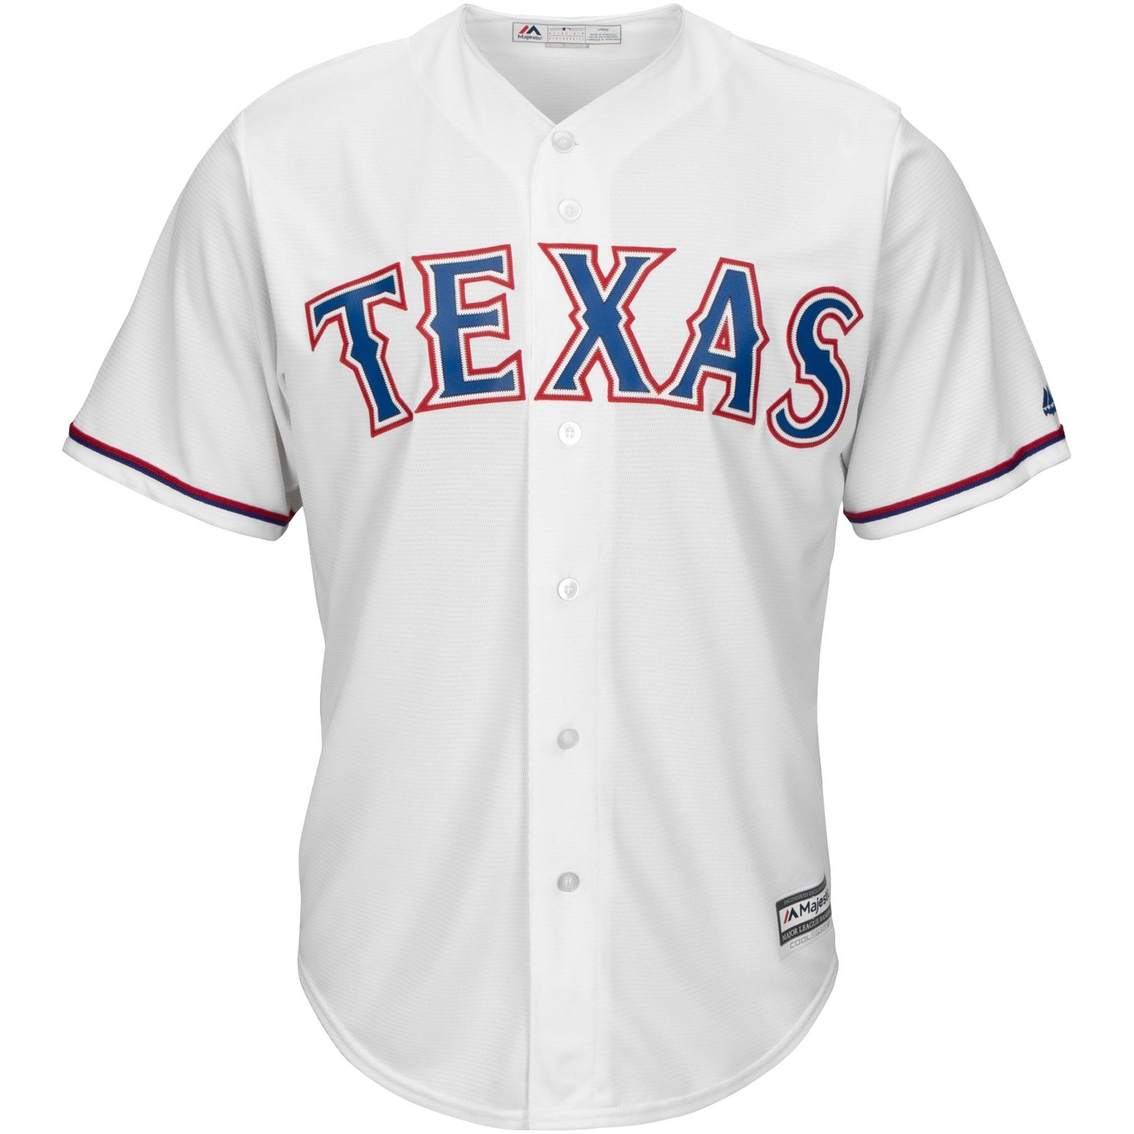 Majestic International Mlb Texas Rangers Home Replica Jersey Shirts ...